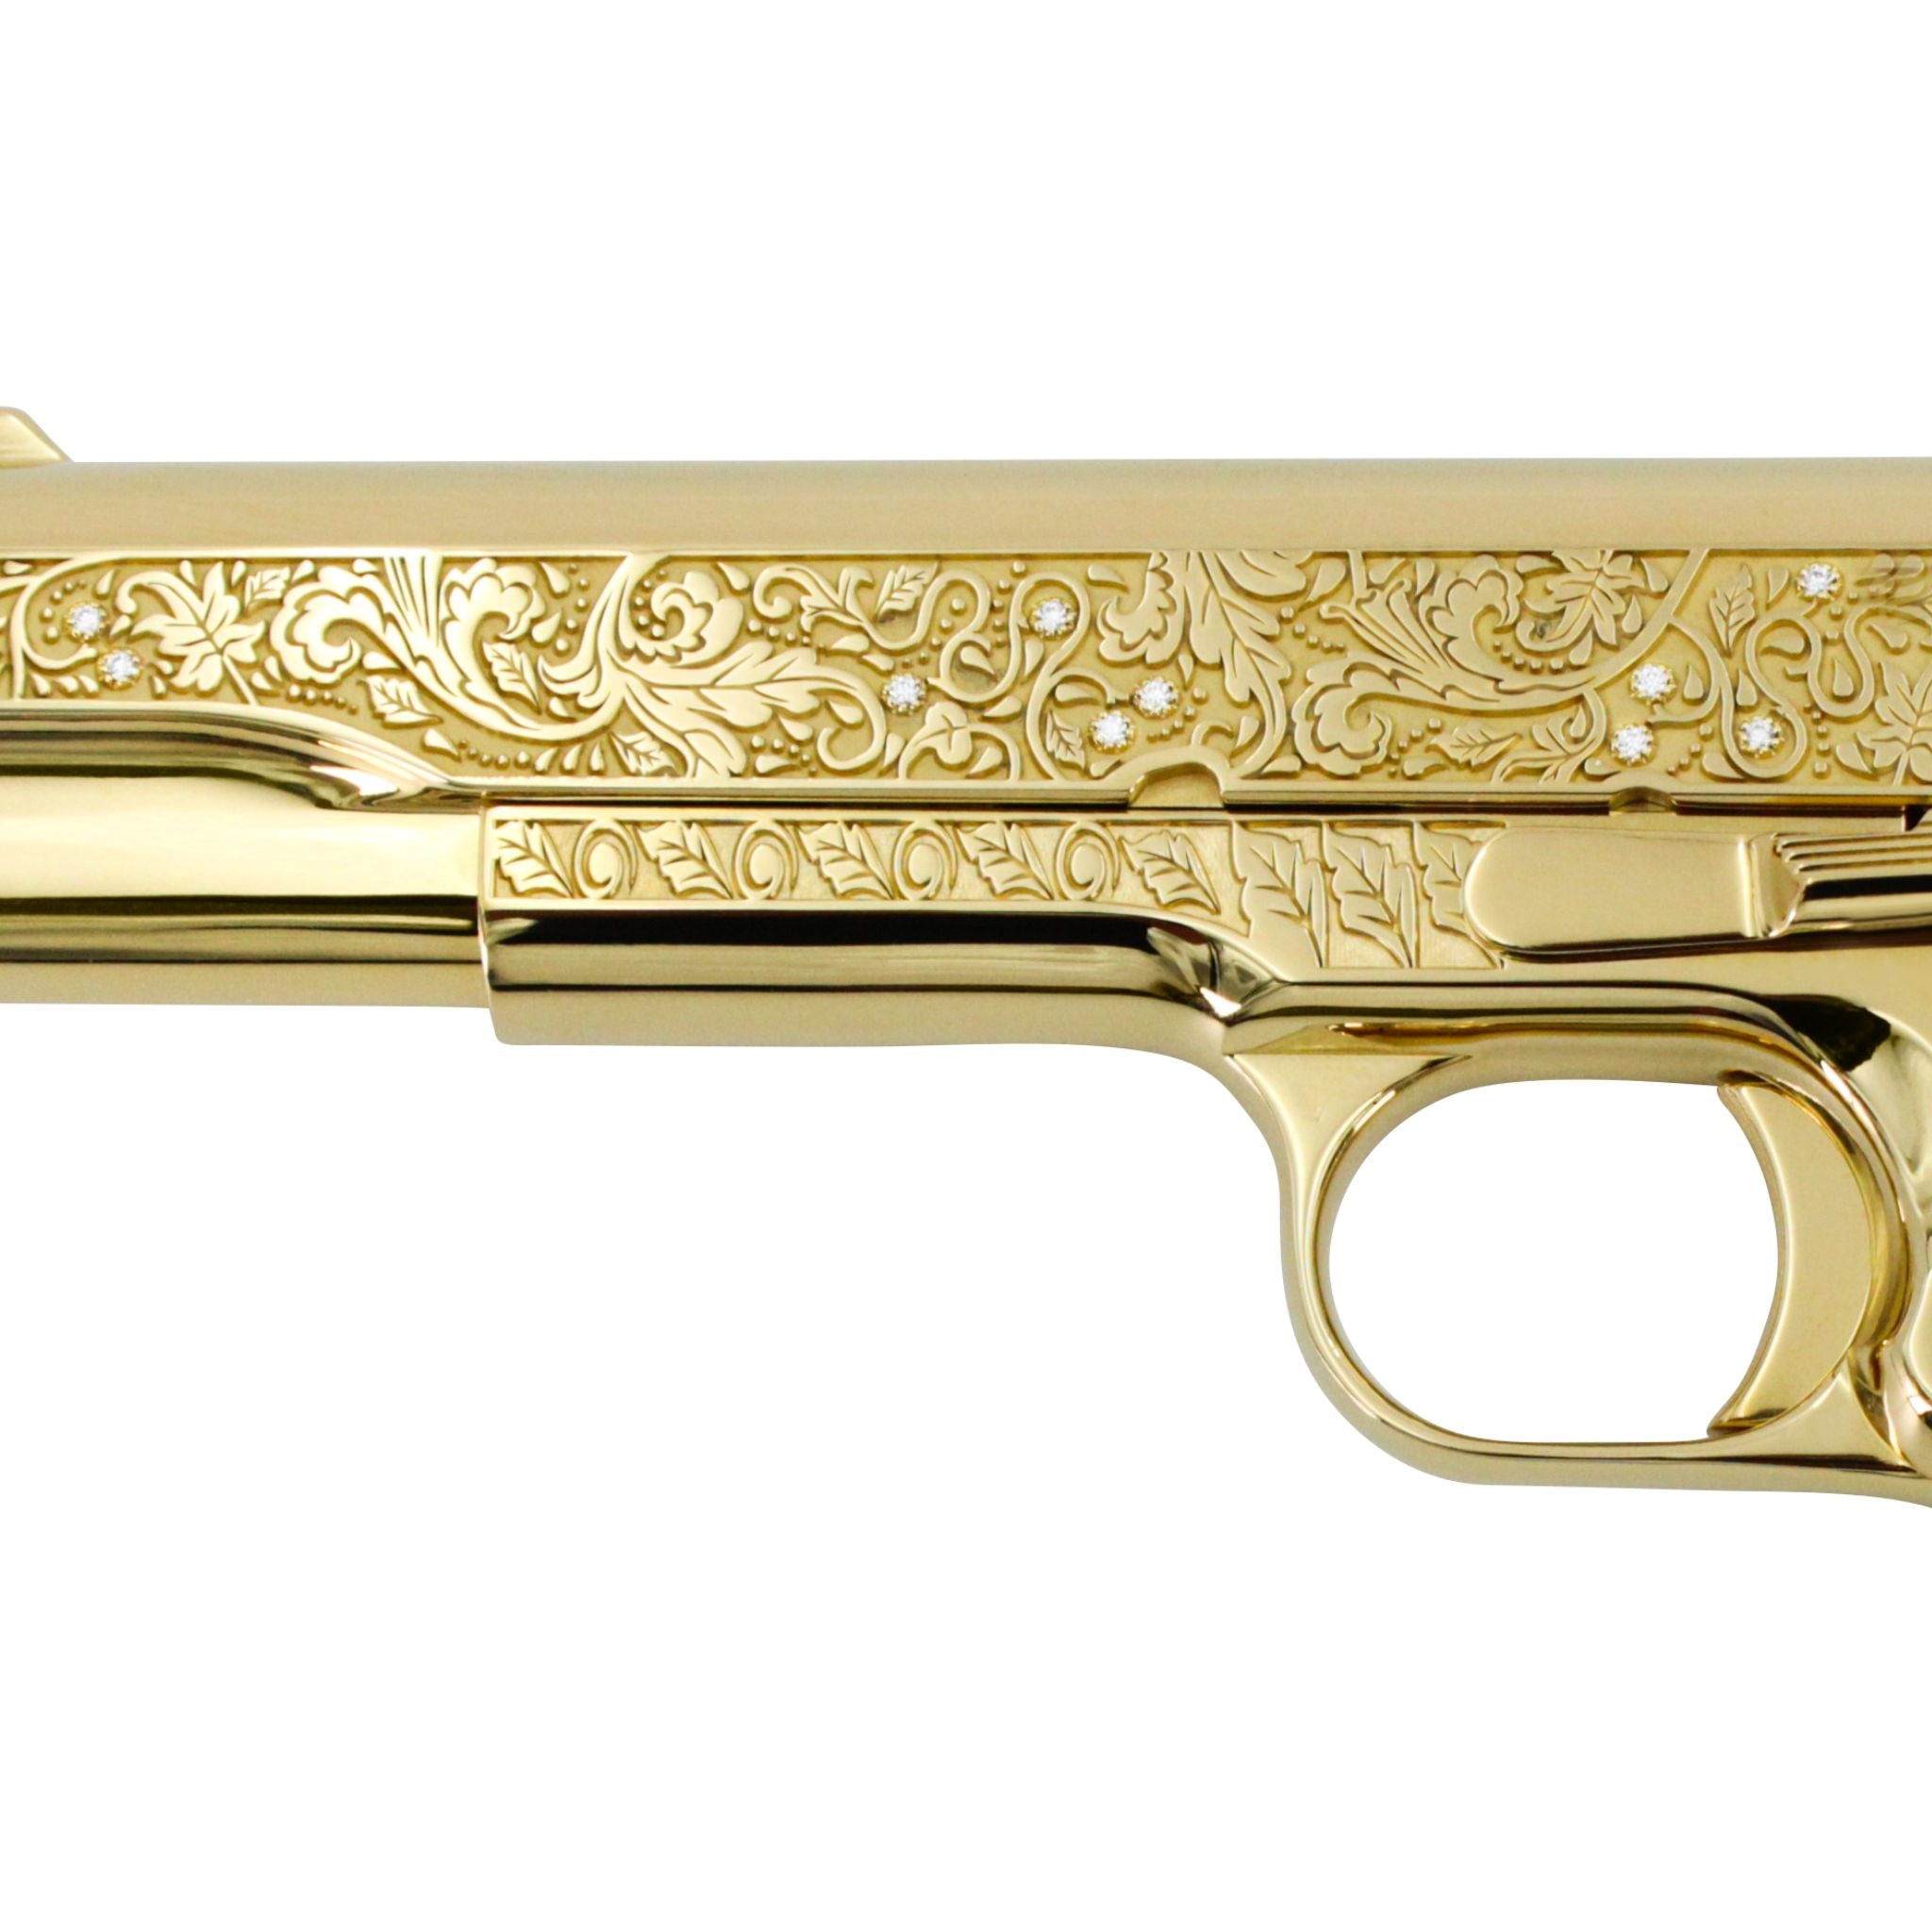 Colt 1911 Government, 38 Super, 9 + 1, Vine and Berries with Diamonds, 24 karat Gold Plated, SKU: 4584642838630, 24 karat gold gun, 24 Karat Gold Firearm